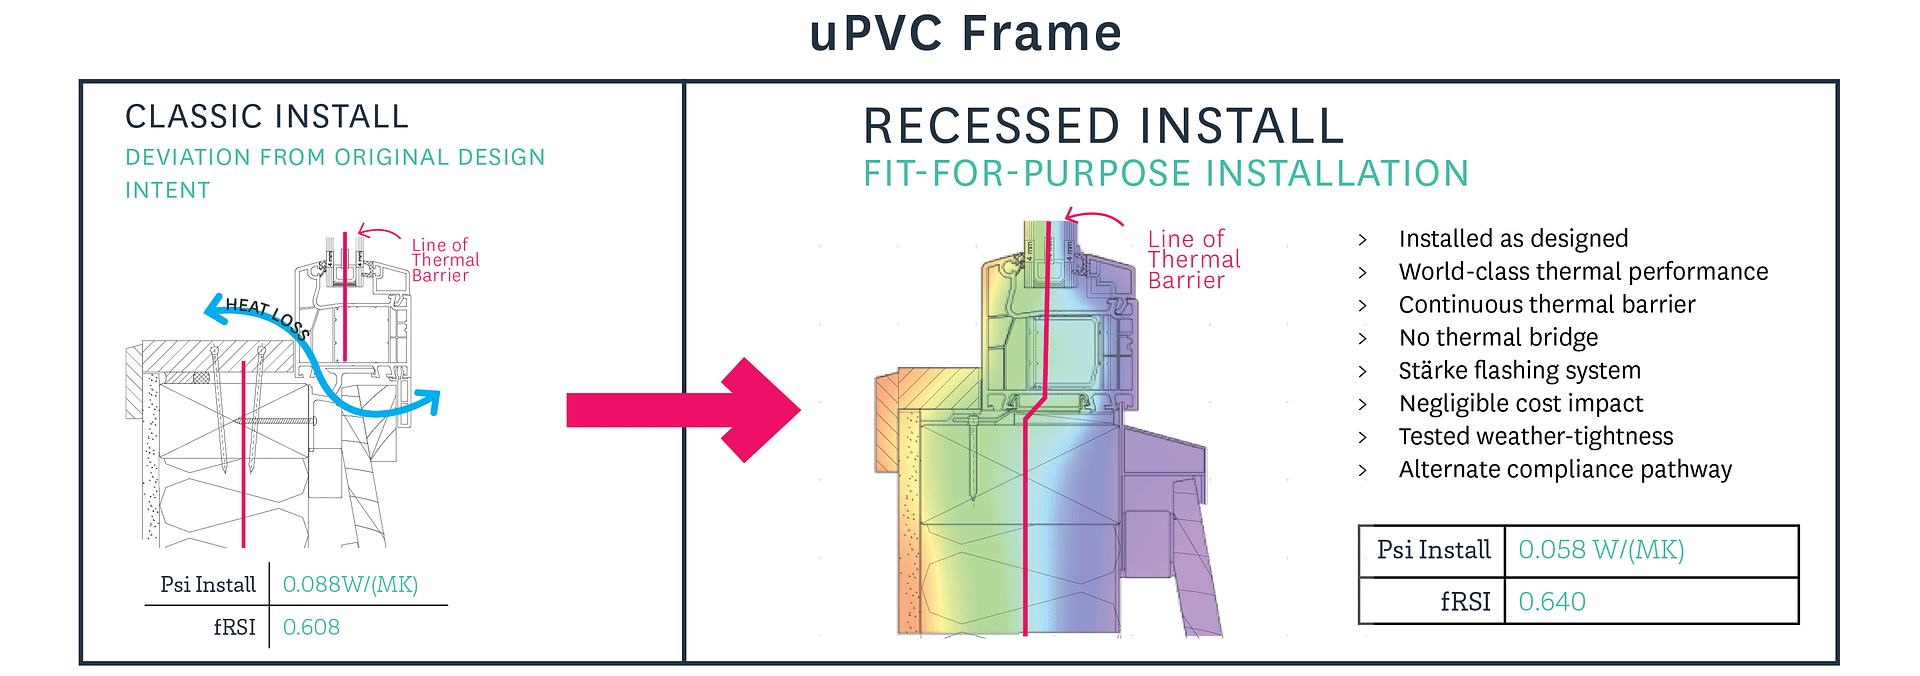 Recessed window installation detail for New Zealand uPVC Starke70 Suite windows